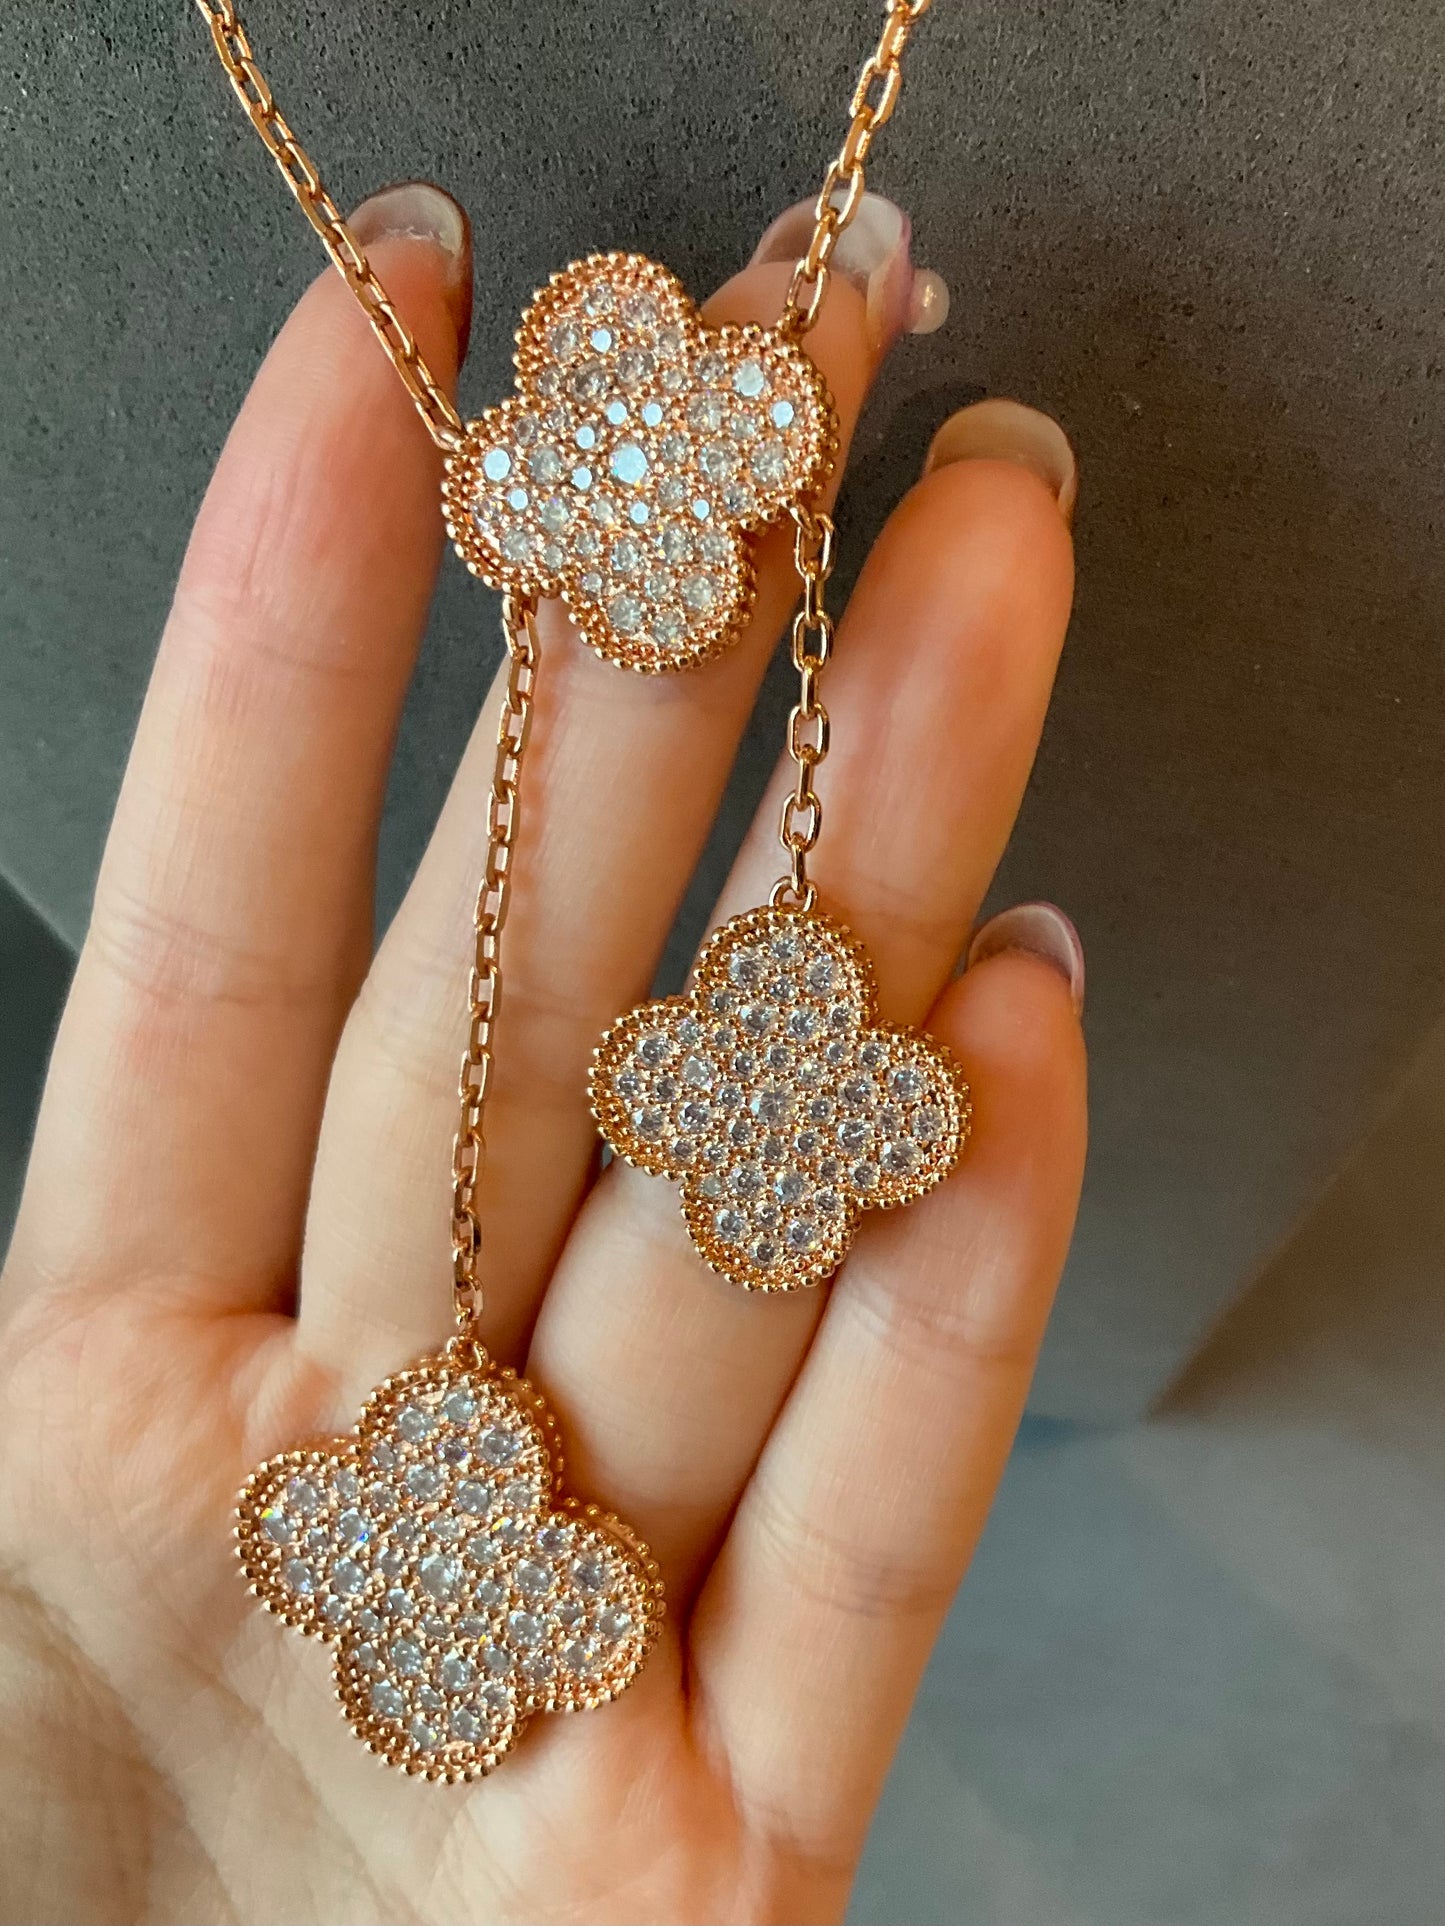 6 motifs CZ diamond charm clover necklace 925 silver rose gold plated 42cm - ParadiseKissCo